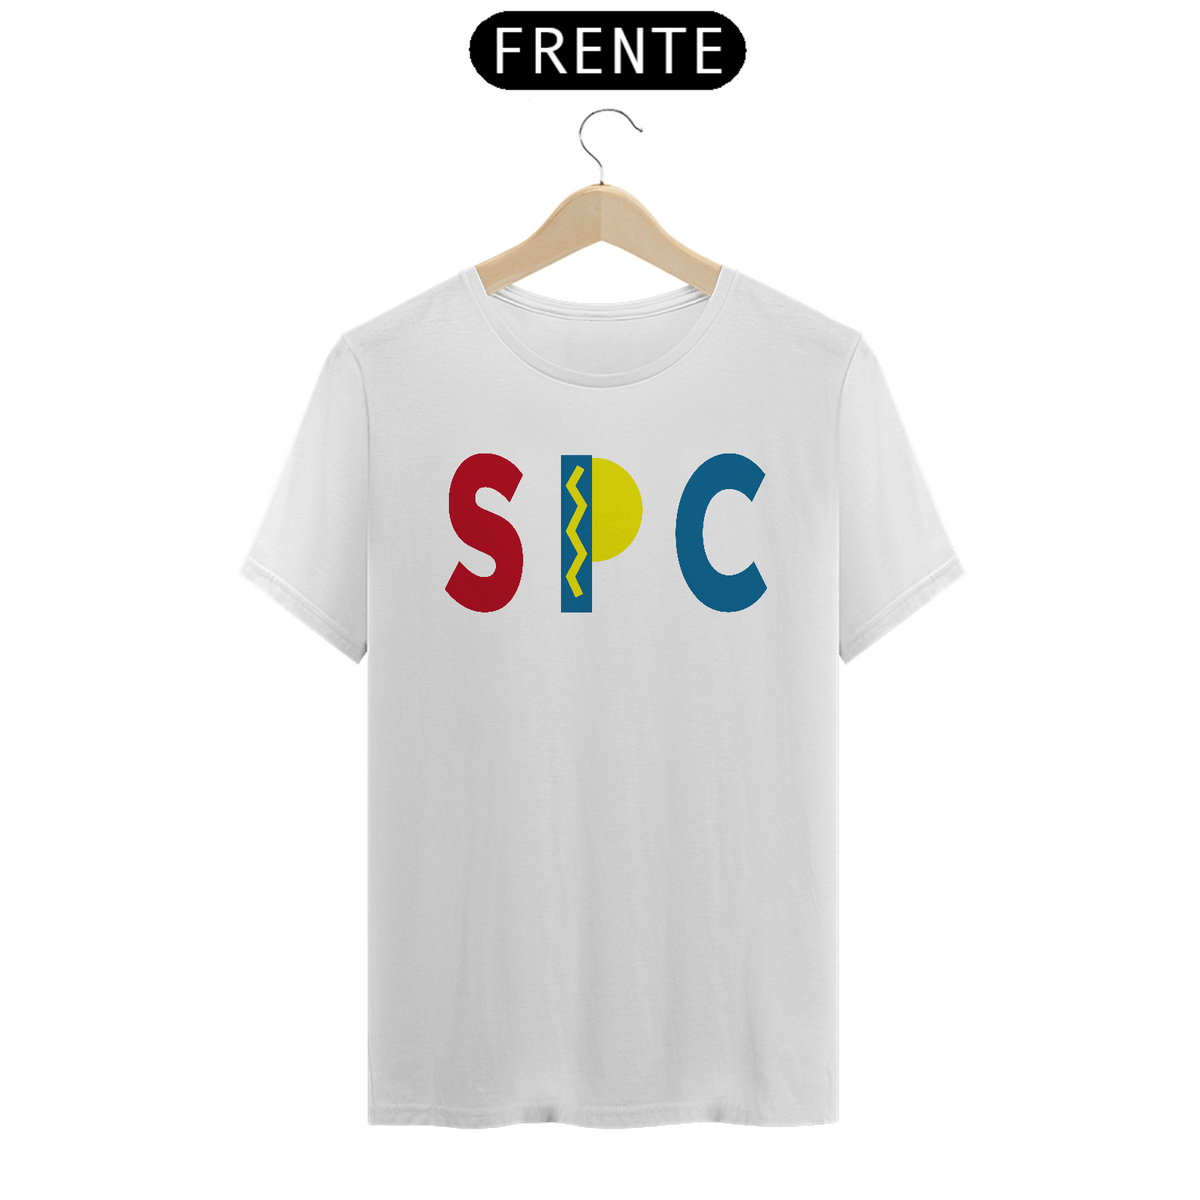 Nome do produto: Camiseta SPC - Só Pra Contrariar